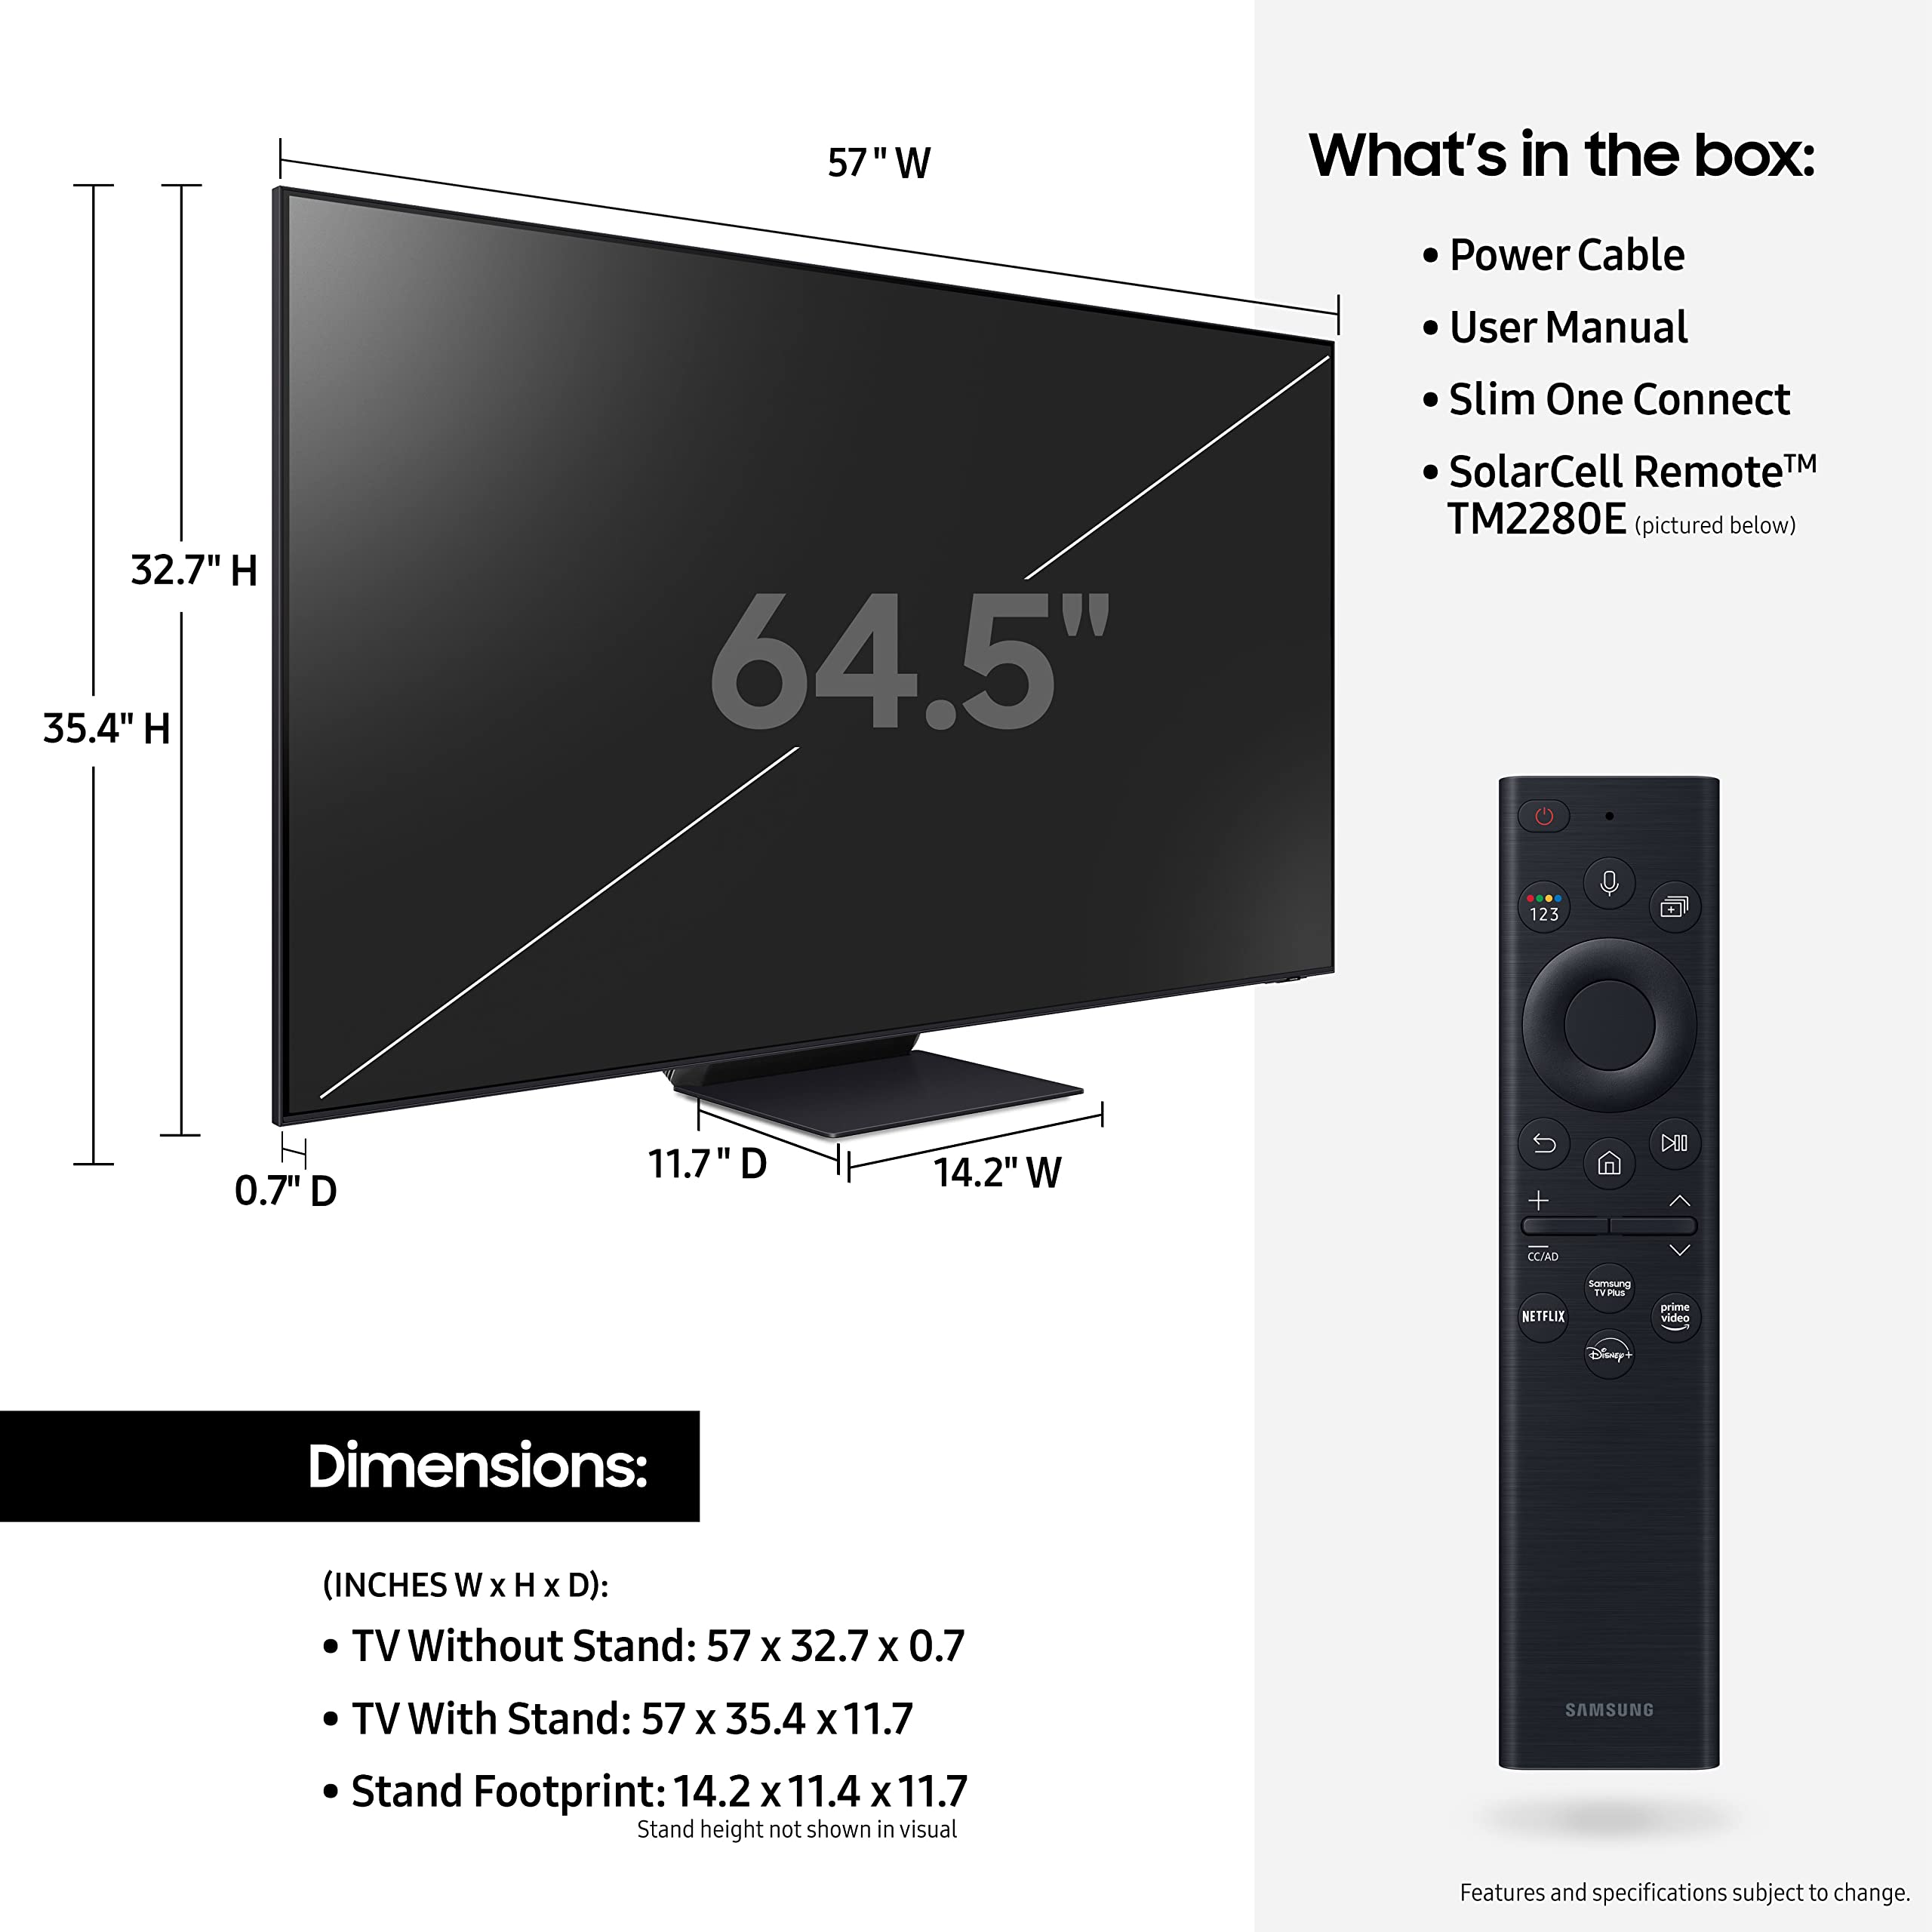 Samsung QN95B 65" Class Neo QLED 4K HDR Smart Mini-LED TV